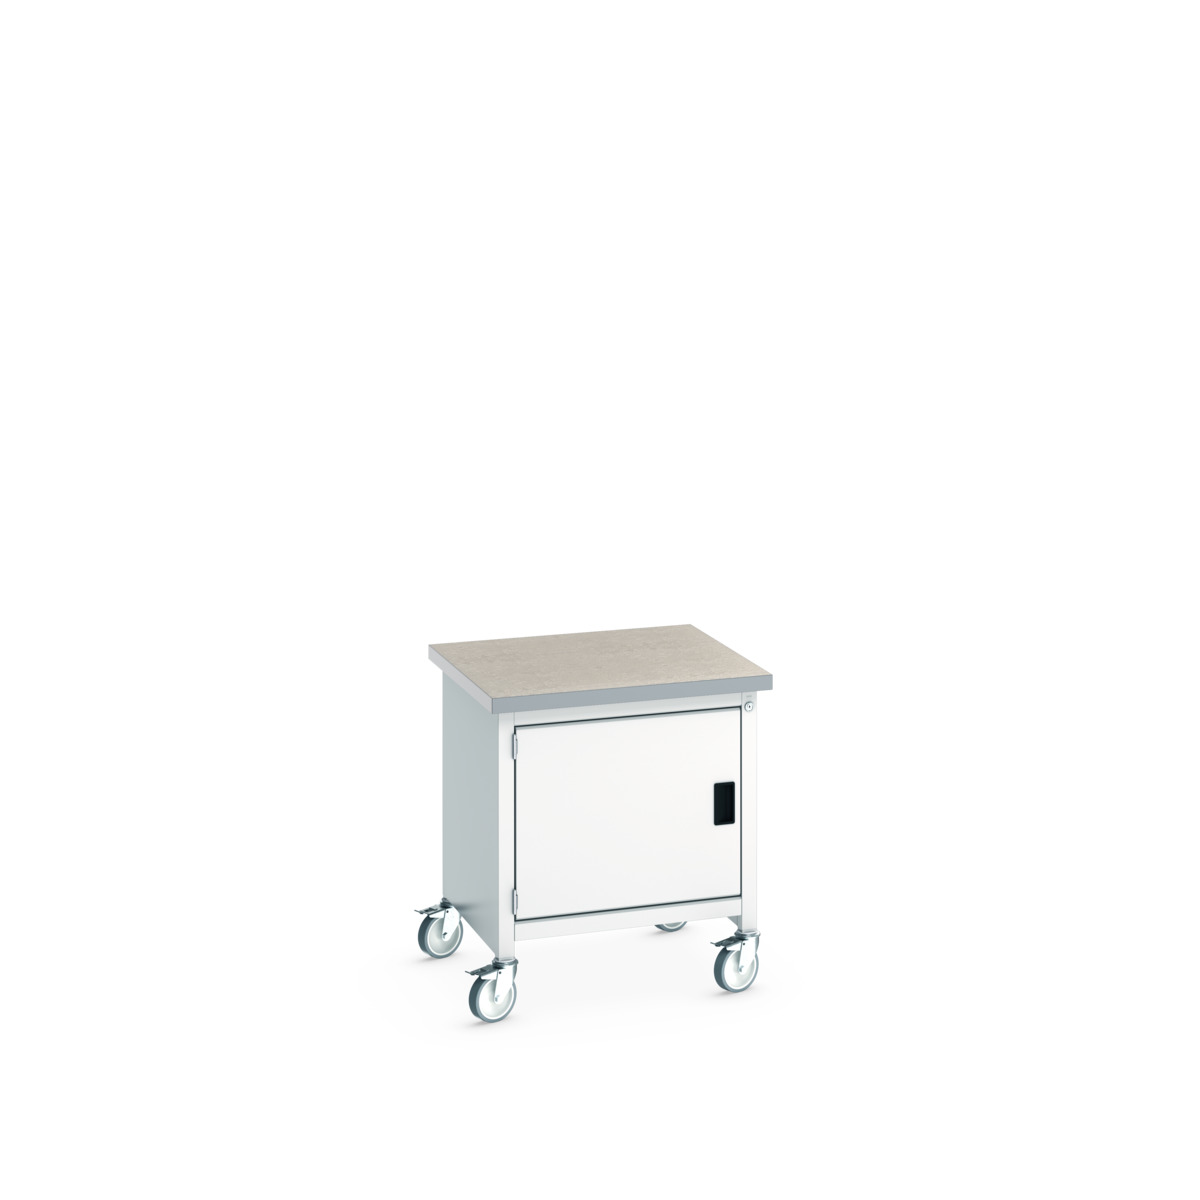 41002087.16V - cubio mobile storage bench (lino)